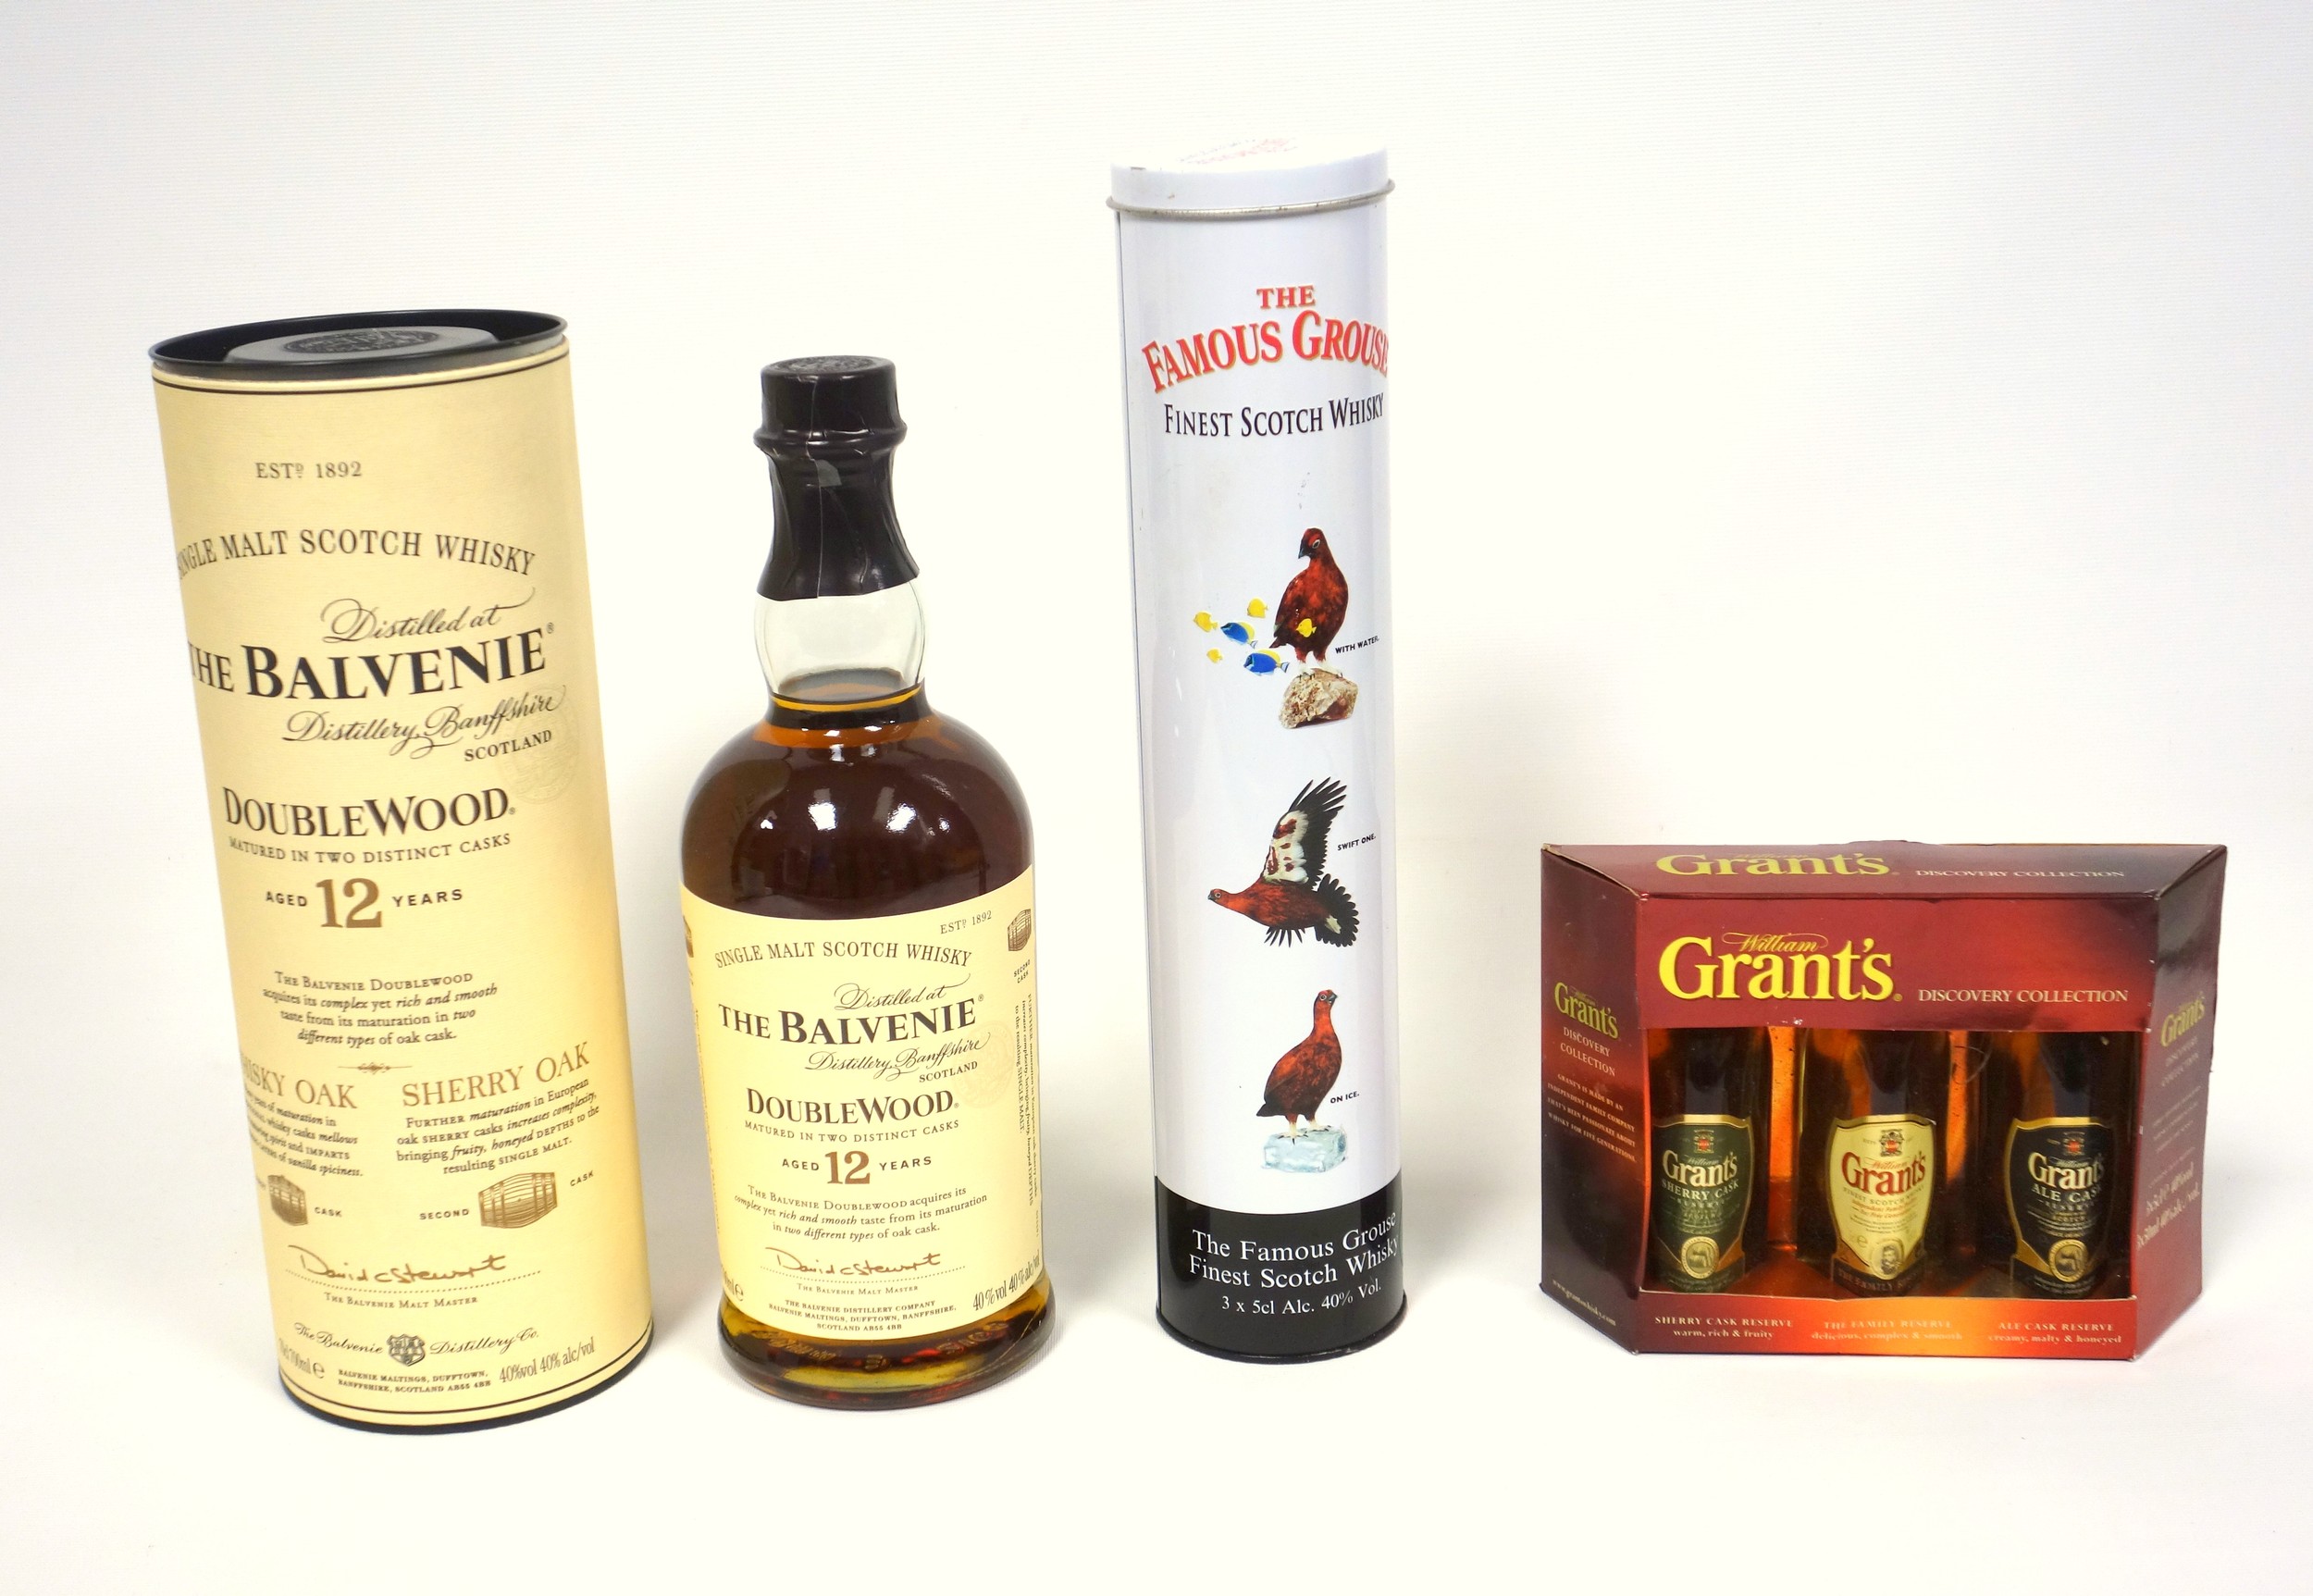 Bottle of Balvenie "DoubleWood" 12 year single malt Scotch Whisky, 70cl, 40% vol., boxed; 3 Famous